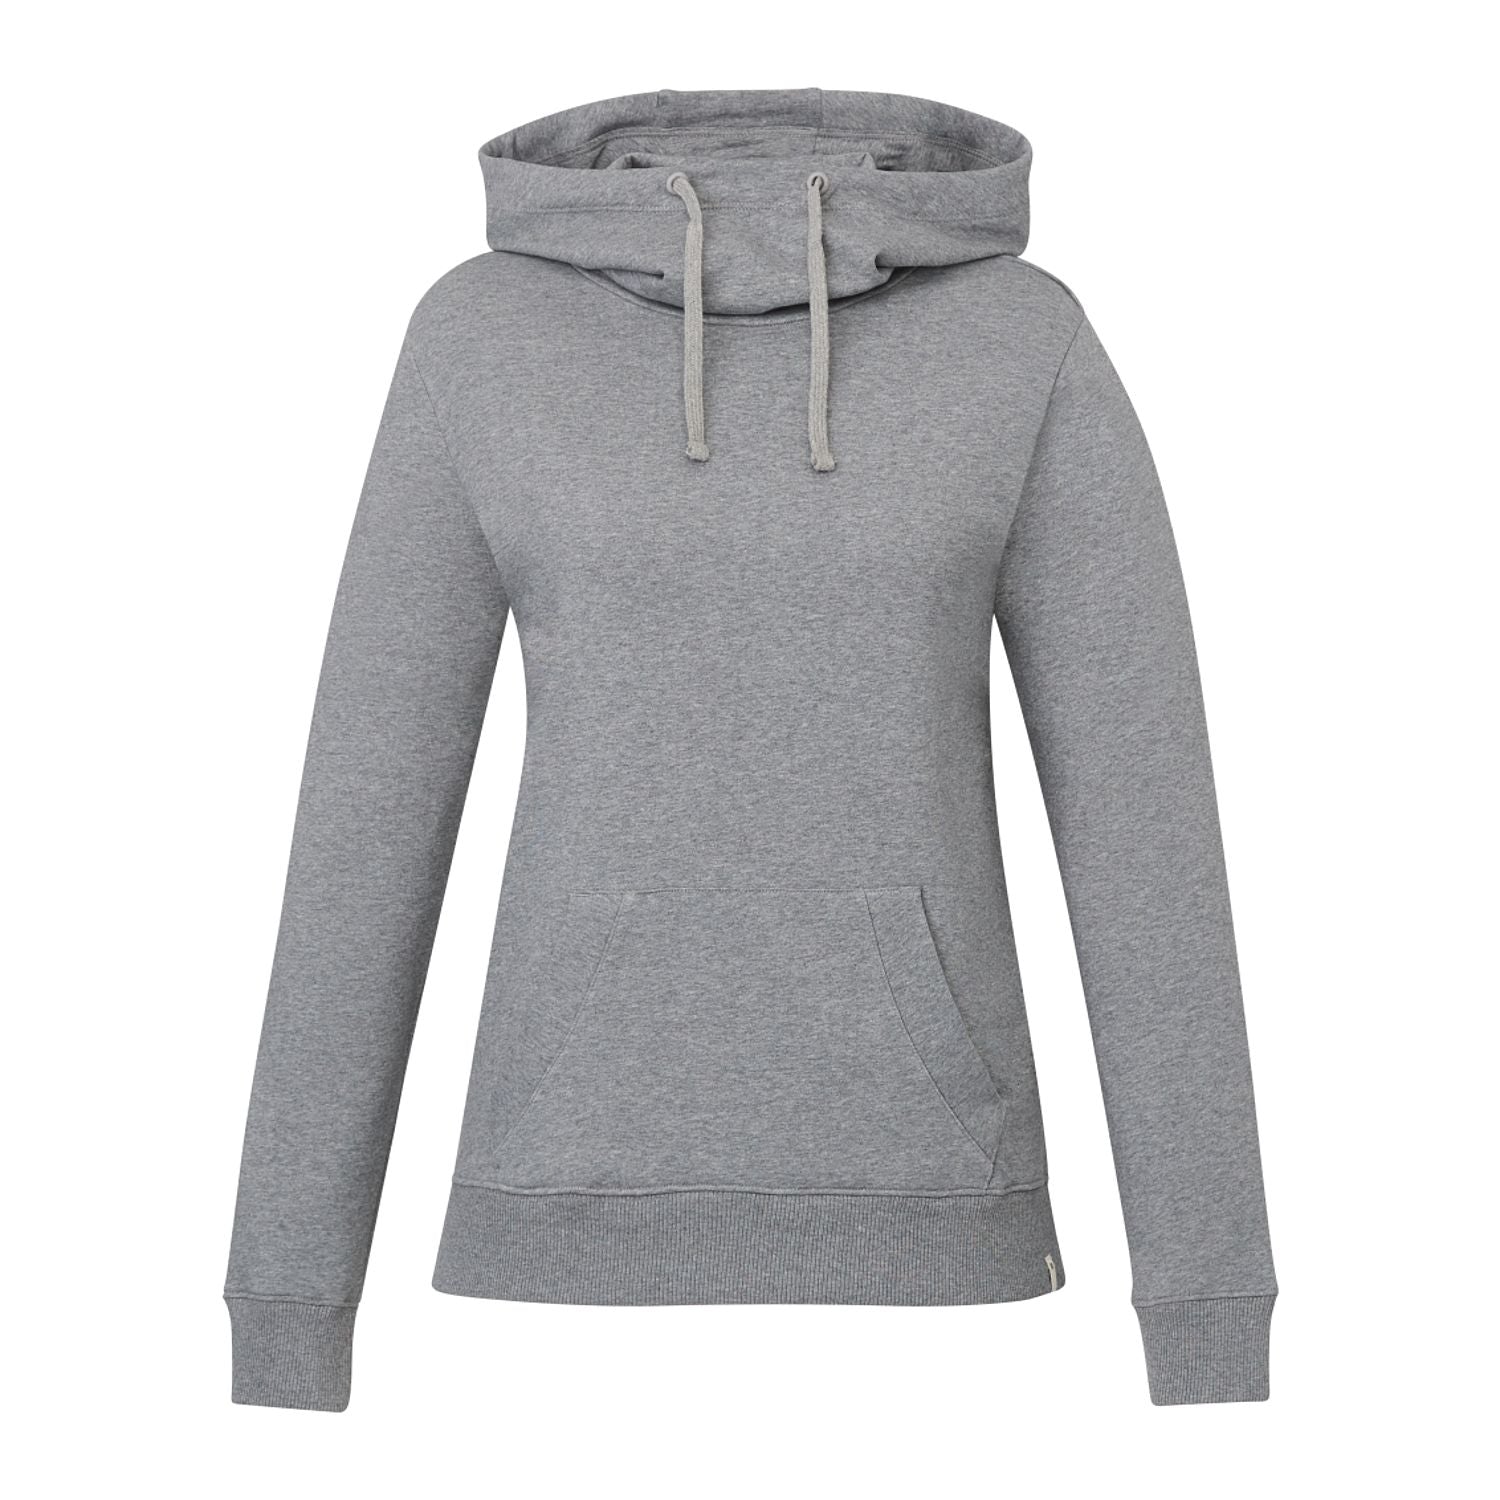 Customizable Tentree women's organic cotton banshee hoodie in heather gray.